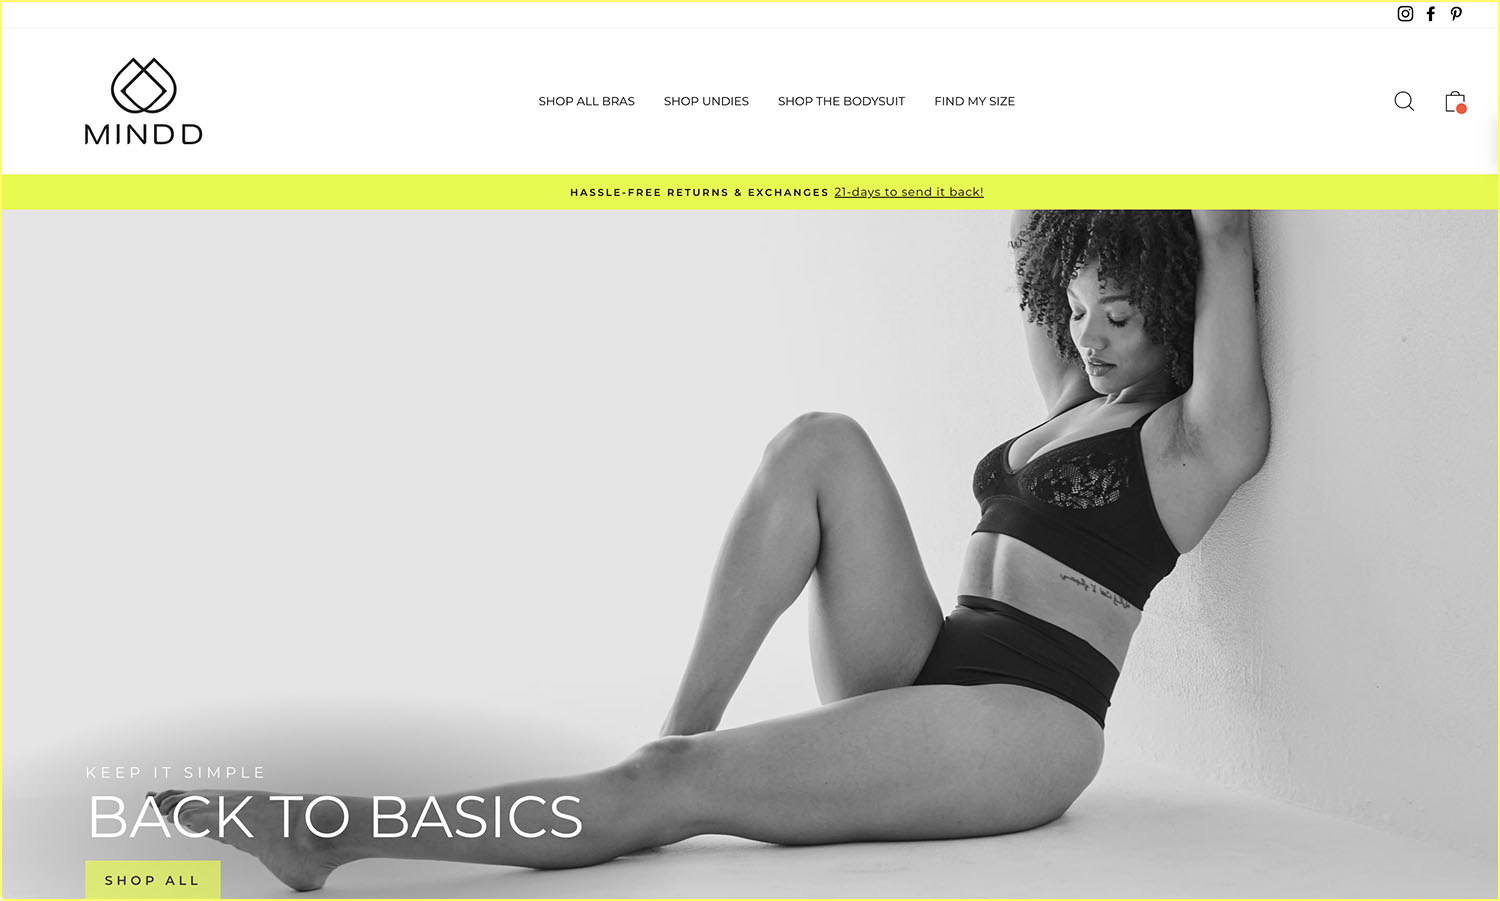 MINDD Bra's website homepage